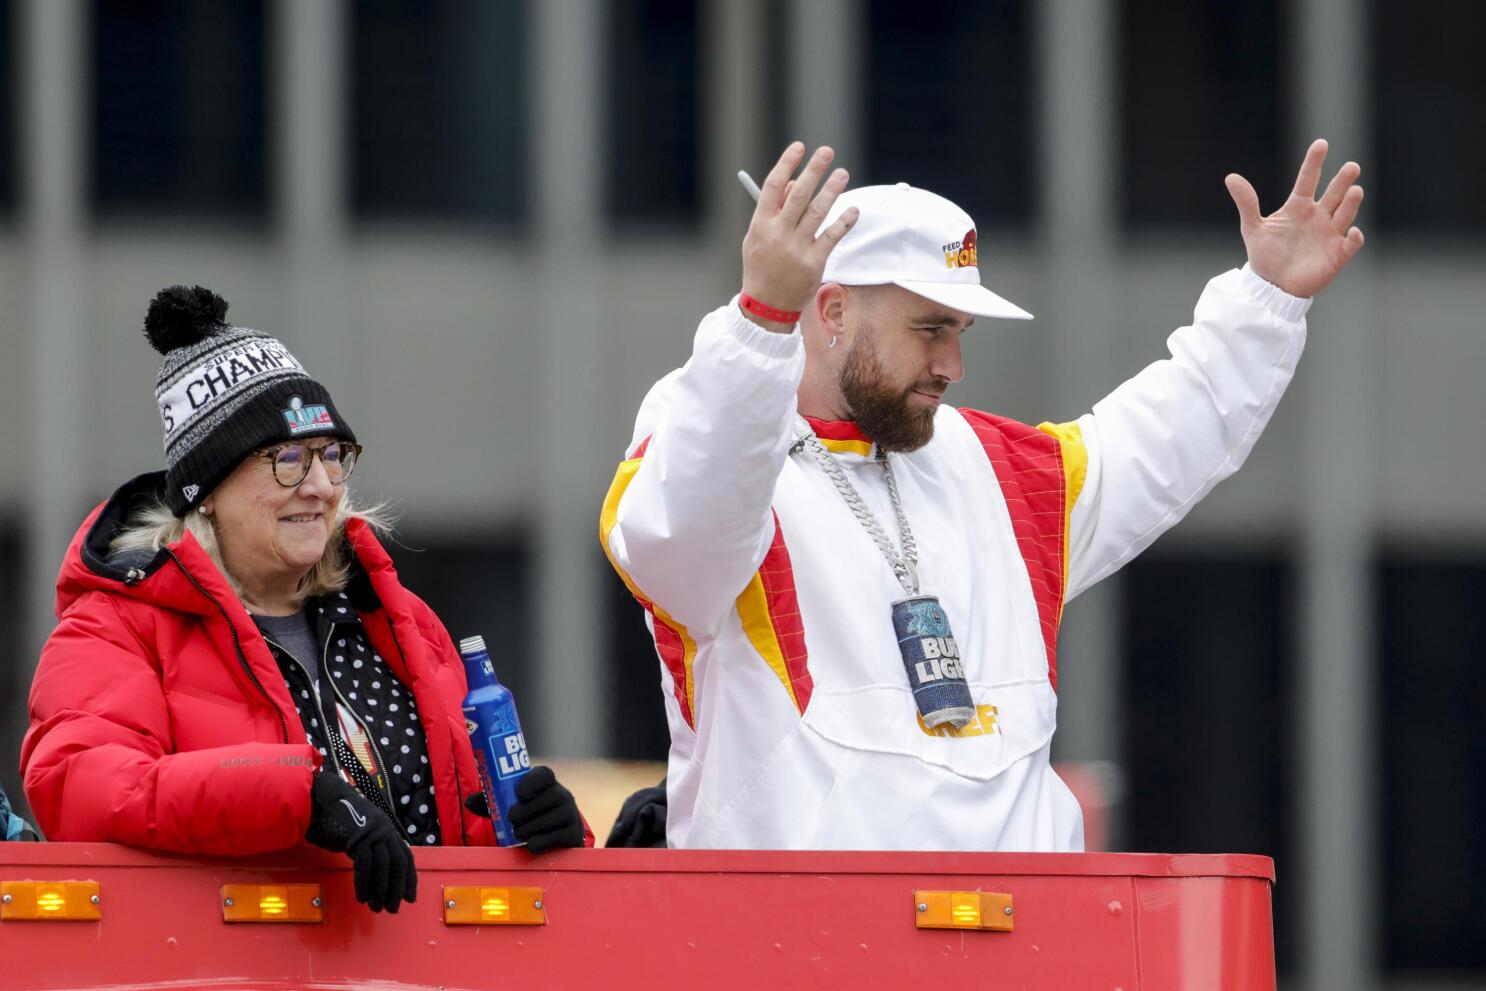 Kansas City Chiefs Travis Kelce Super Bowl Parade Jacket